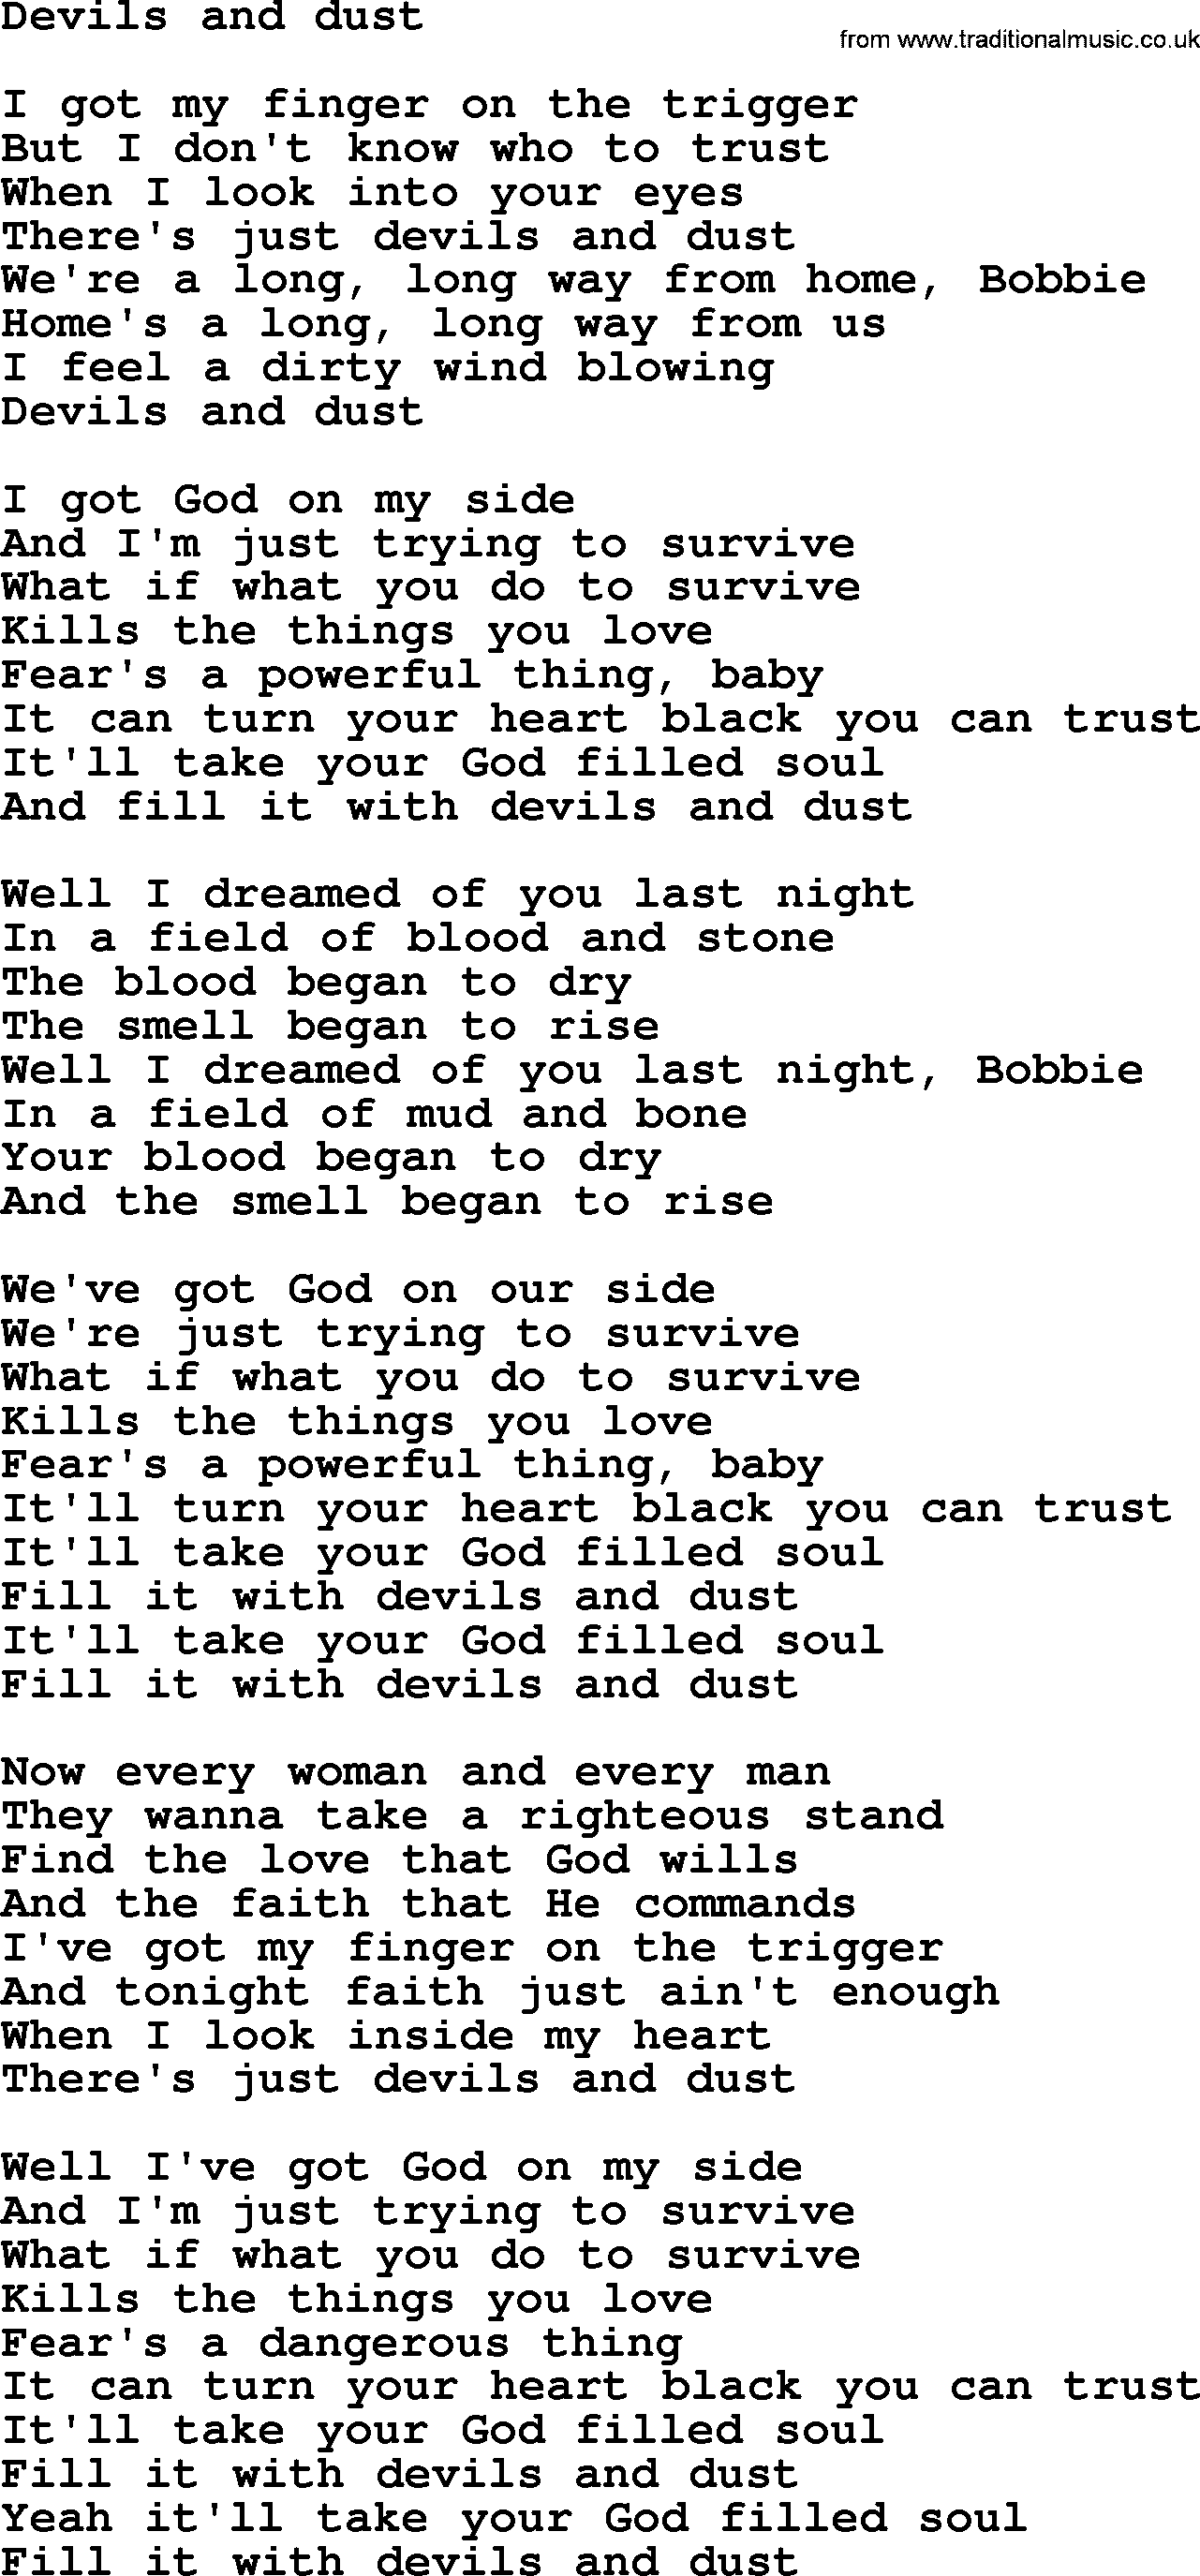 Bruce Springsteen song: Devils And Dust lyrics